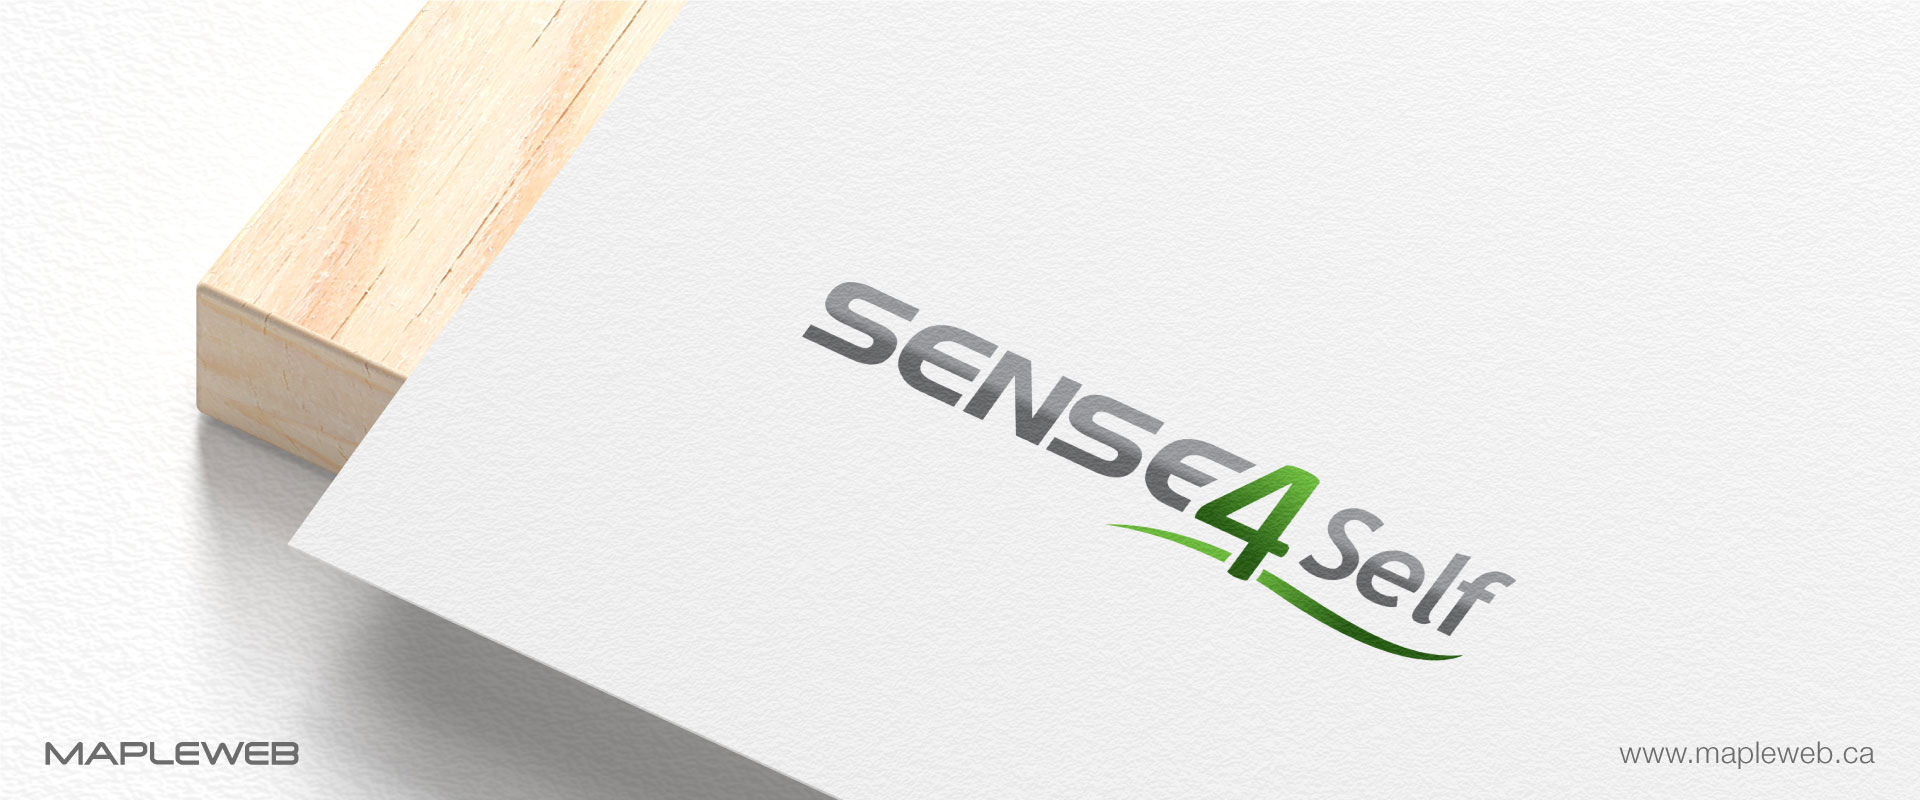 
sense-4-self-brand-logo-design-by-mapleweb-vancouver-canada-paper-mock